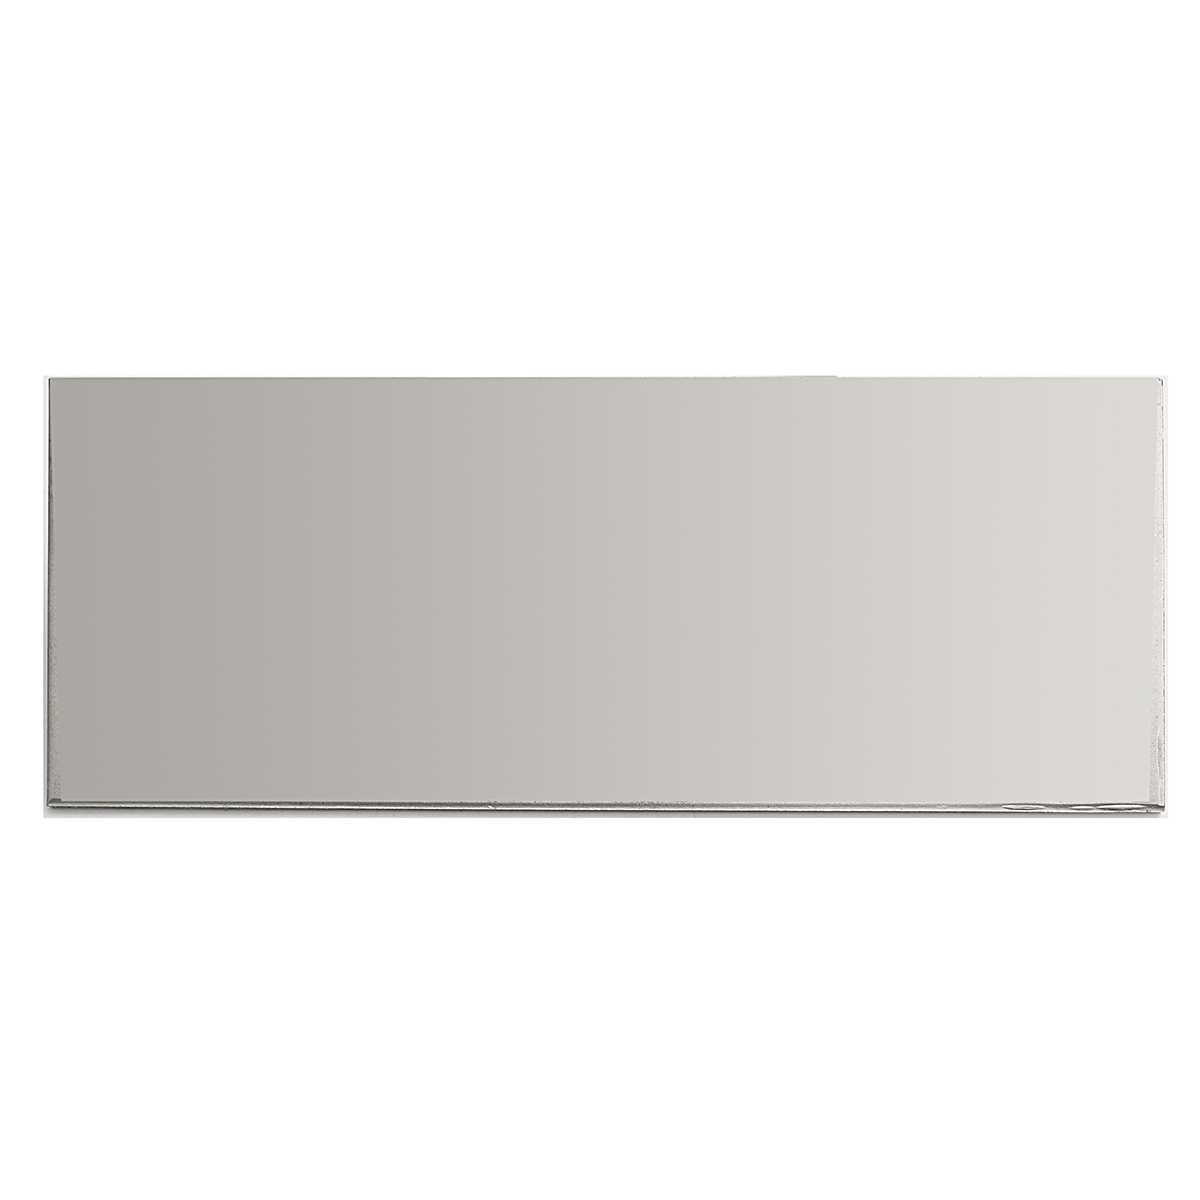 Titanium-Alloy-Grade5-6al-4v-Sheet-Plate-Metalworking-Supplies-1105487